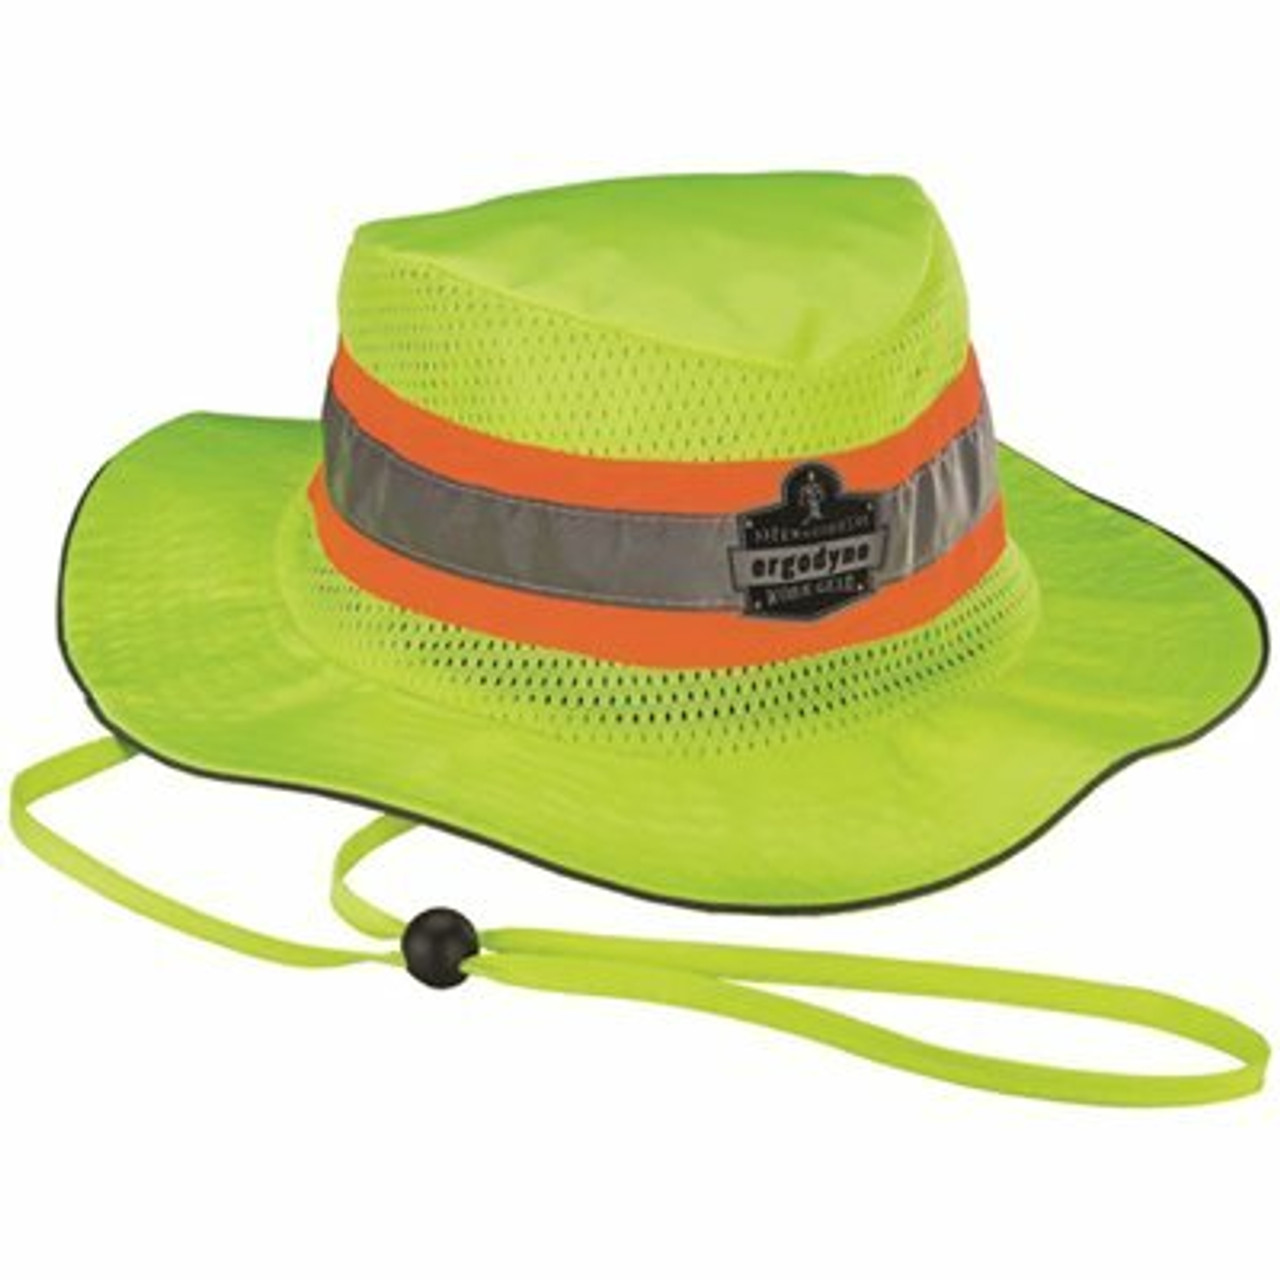 Ergodyne Glowear Large/Extra Large Hi-Vis Lime Green Ranger Hat